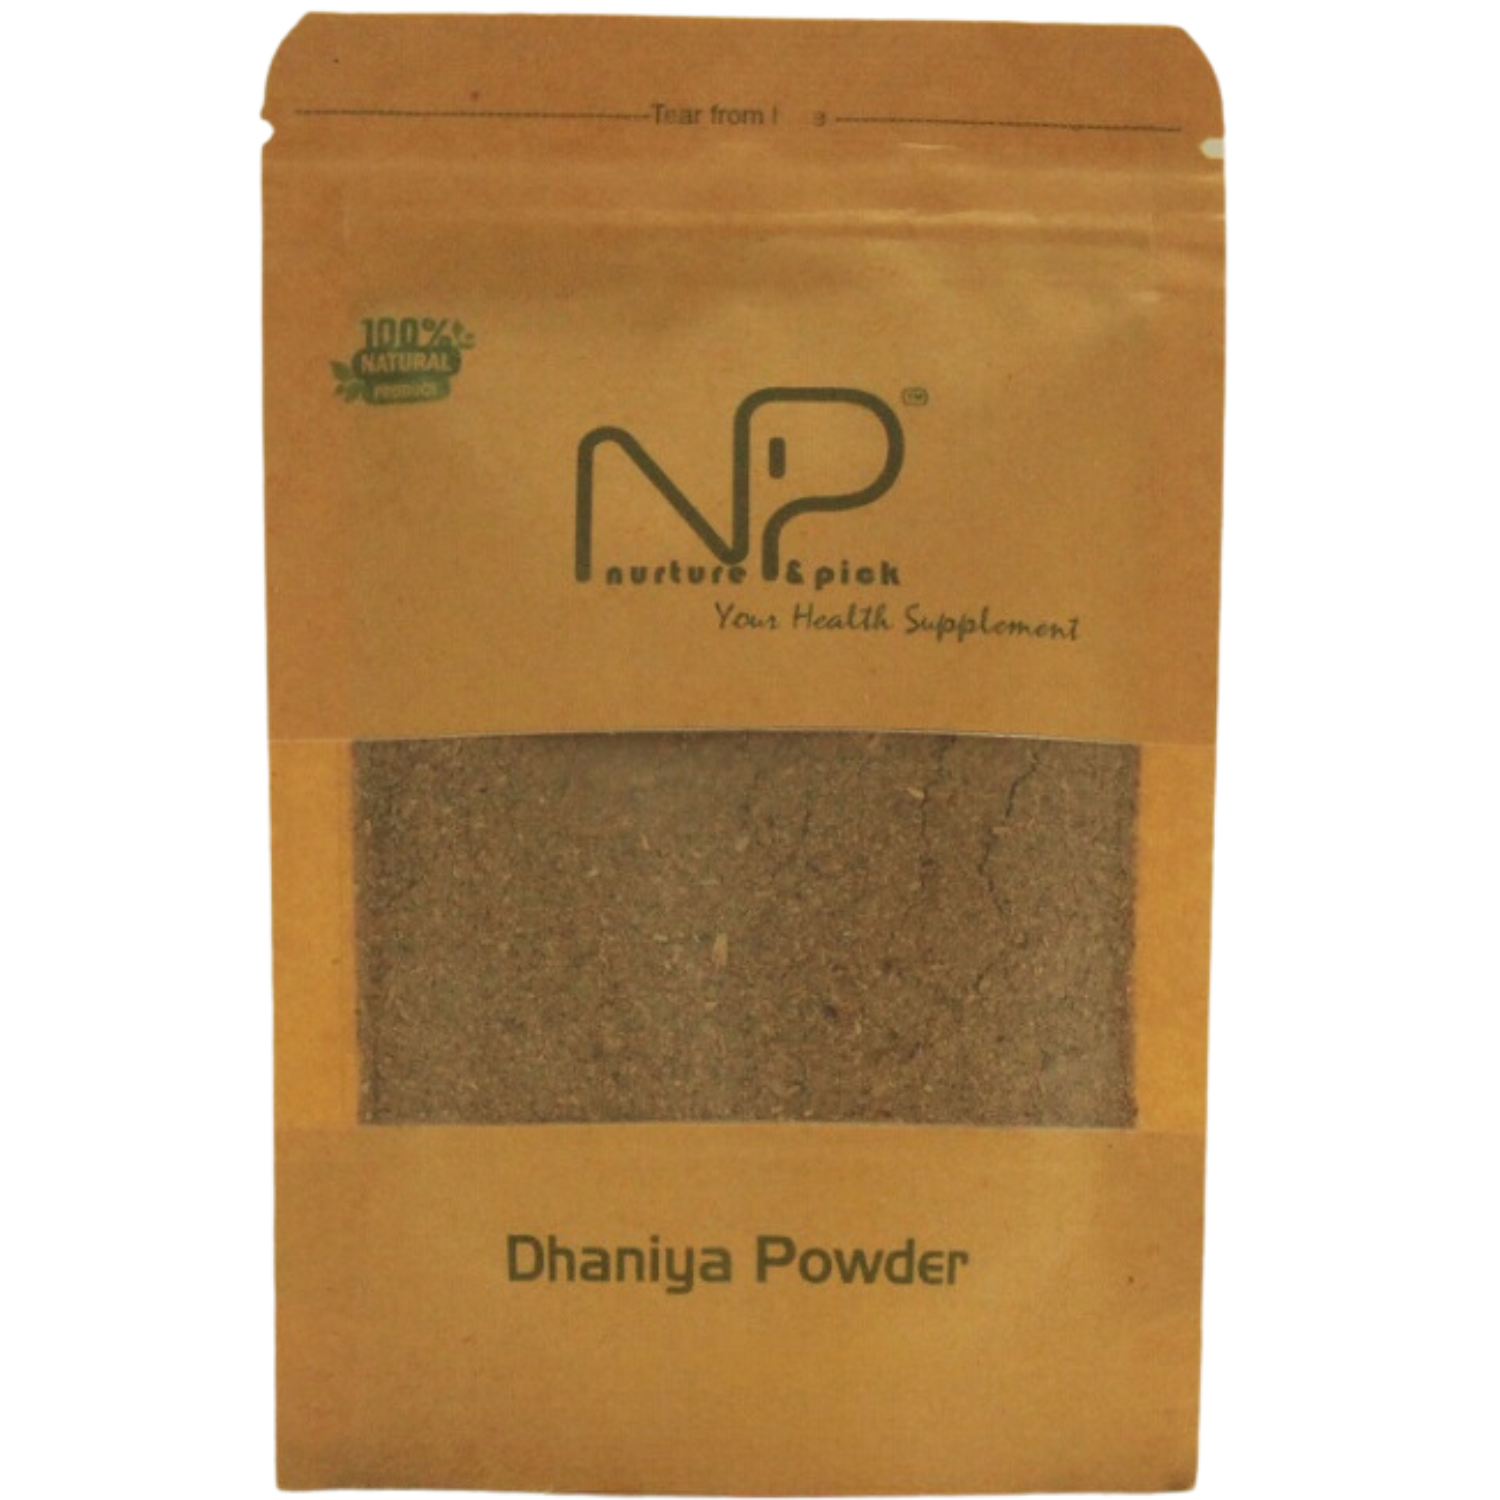 Nature Pick Dhania Powder